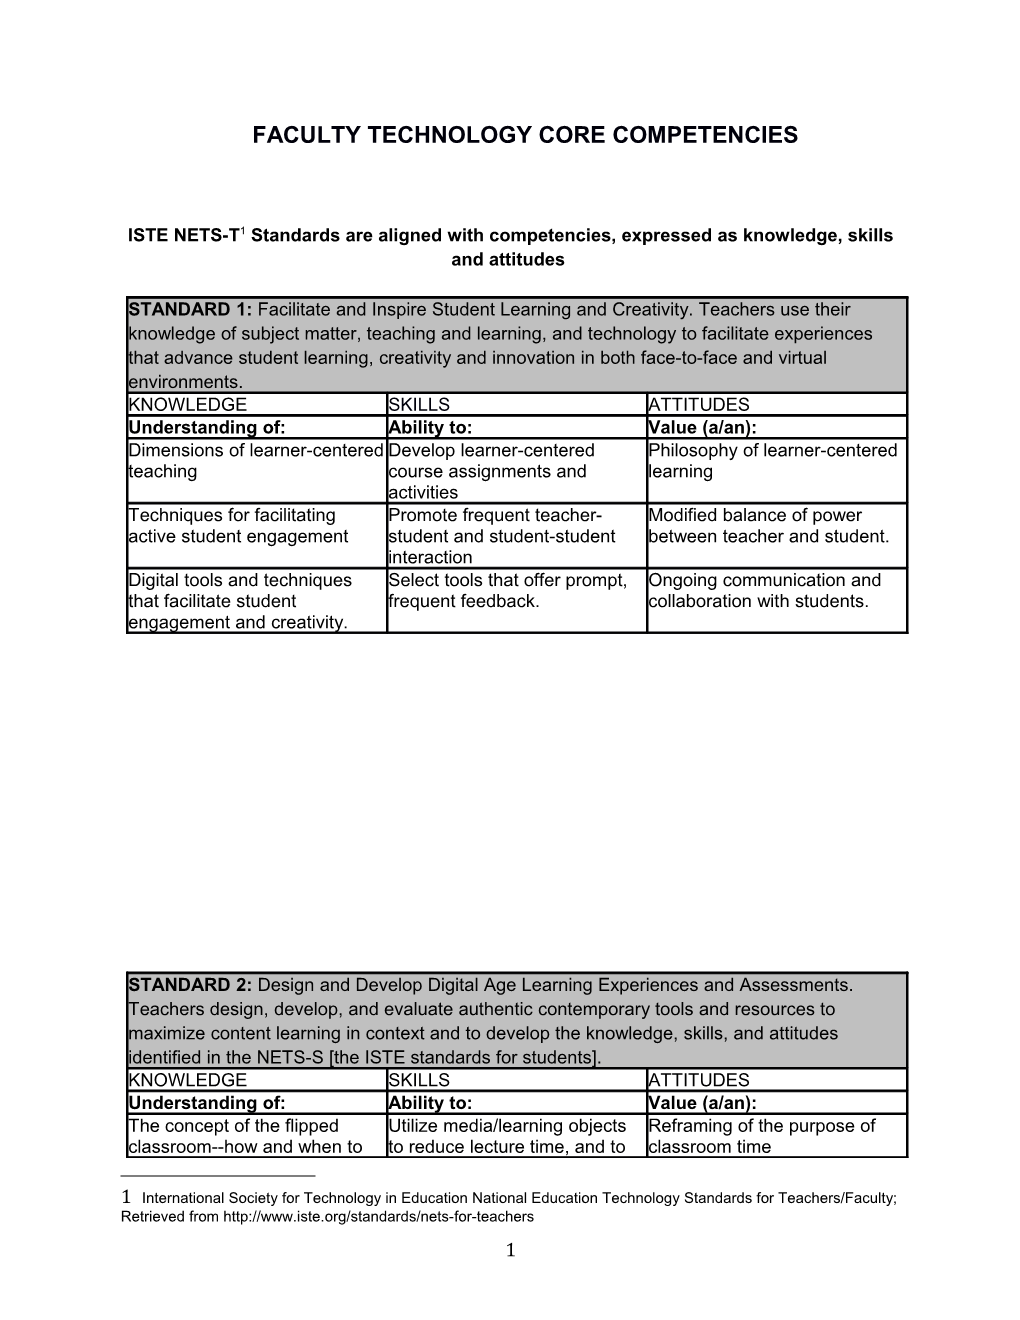 Pedagogical Competencies Samuel Merritt University for Academic Council Feb 5 2013